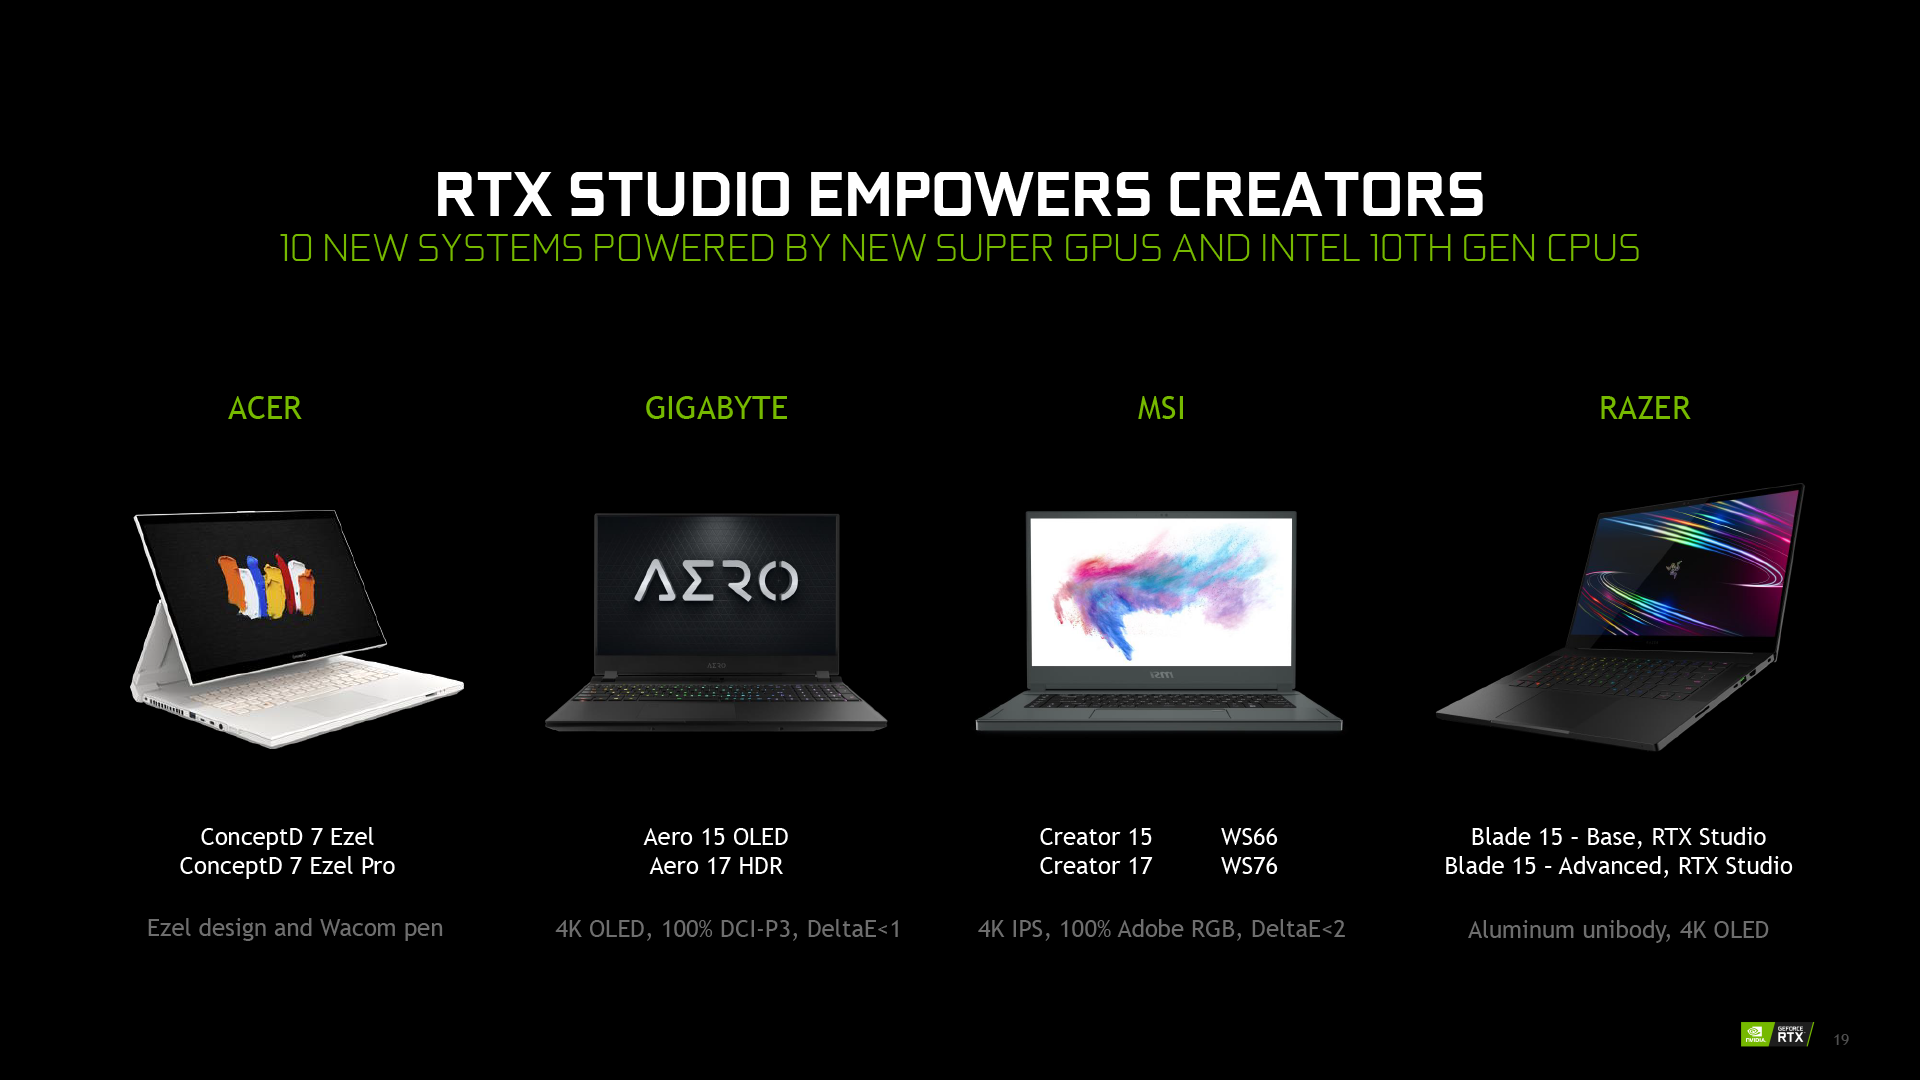 GeForce RTX Super and New Max-Q